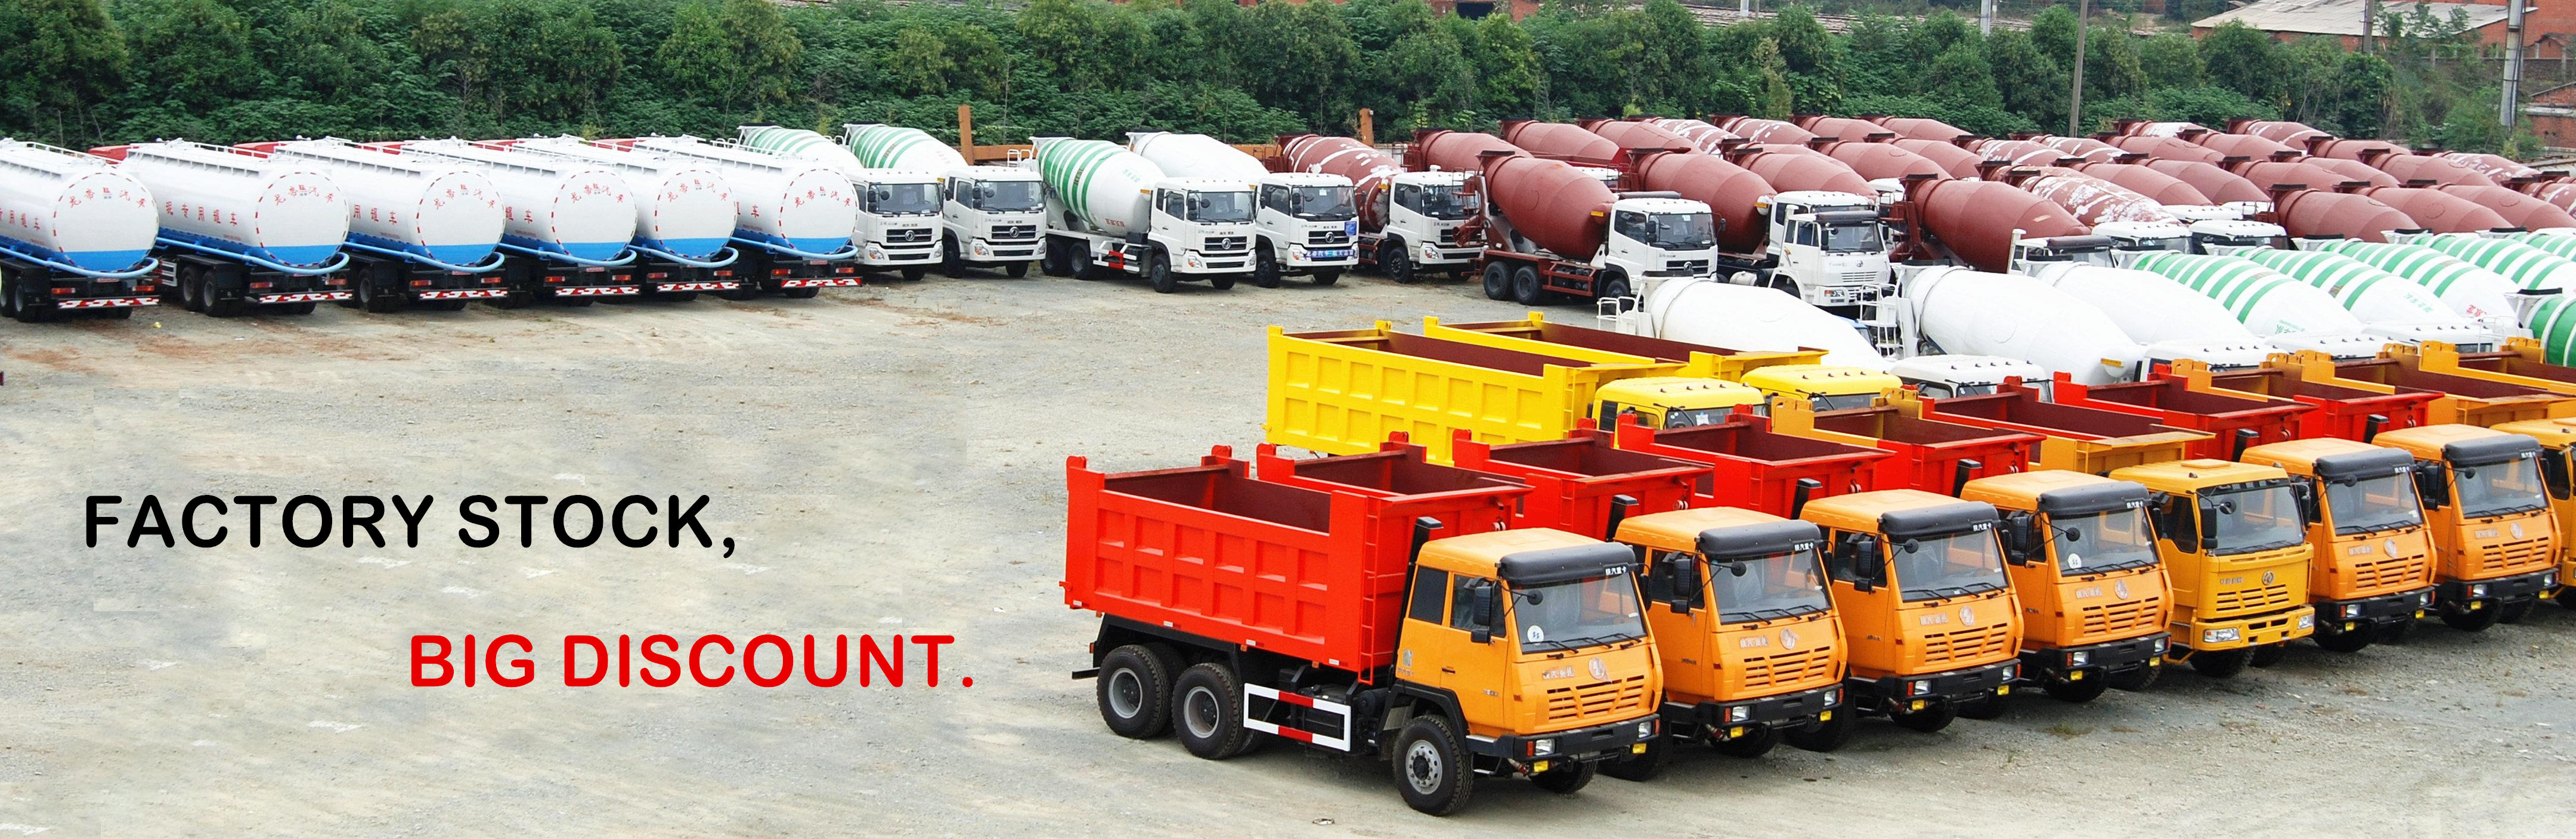 CEEC produced trucks in factory stock